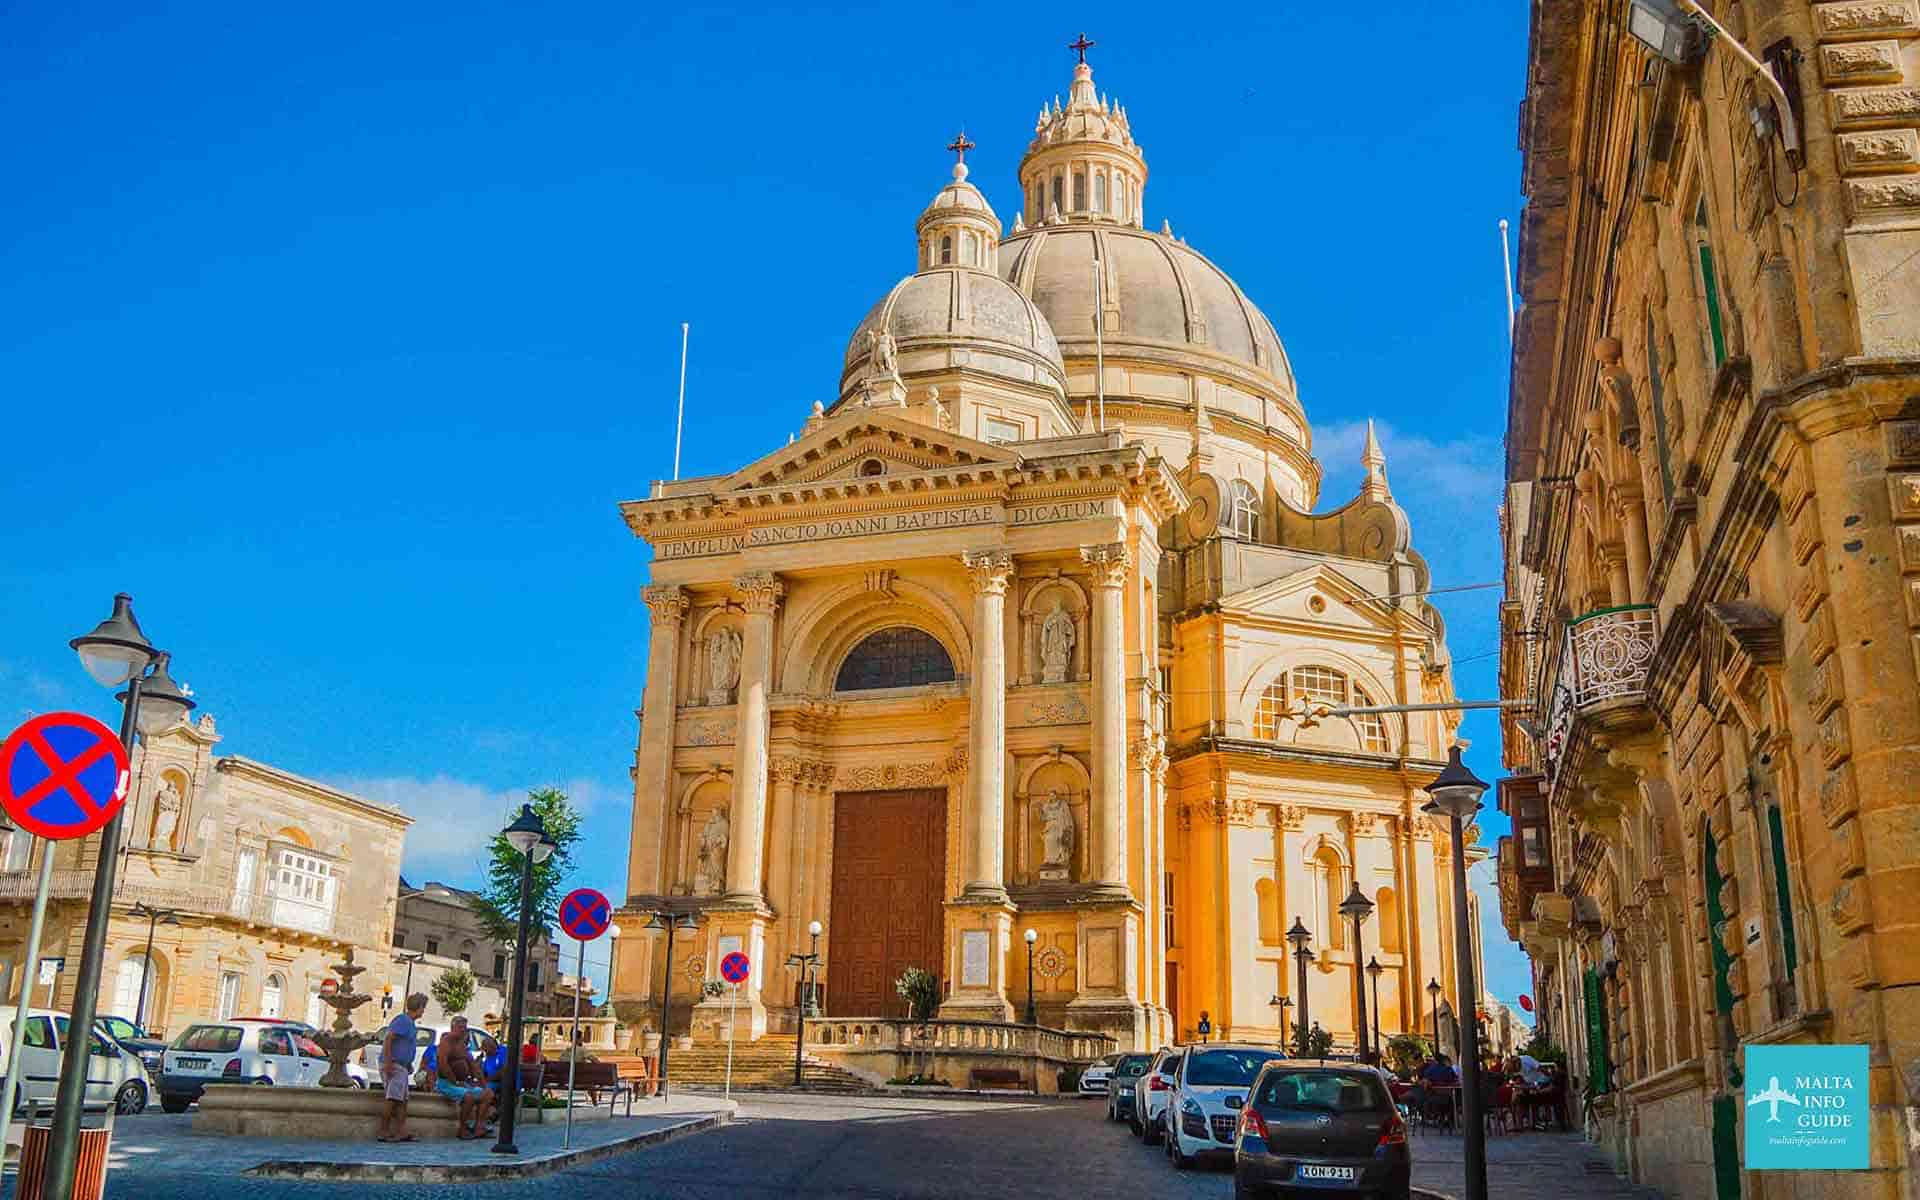 The Xewkija rotunda church in Gozo.